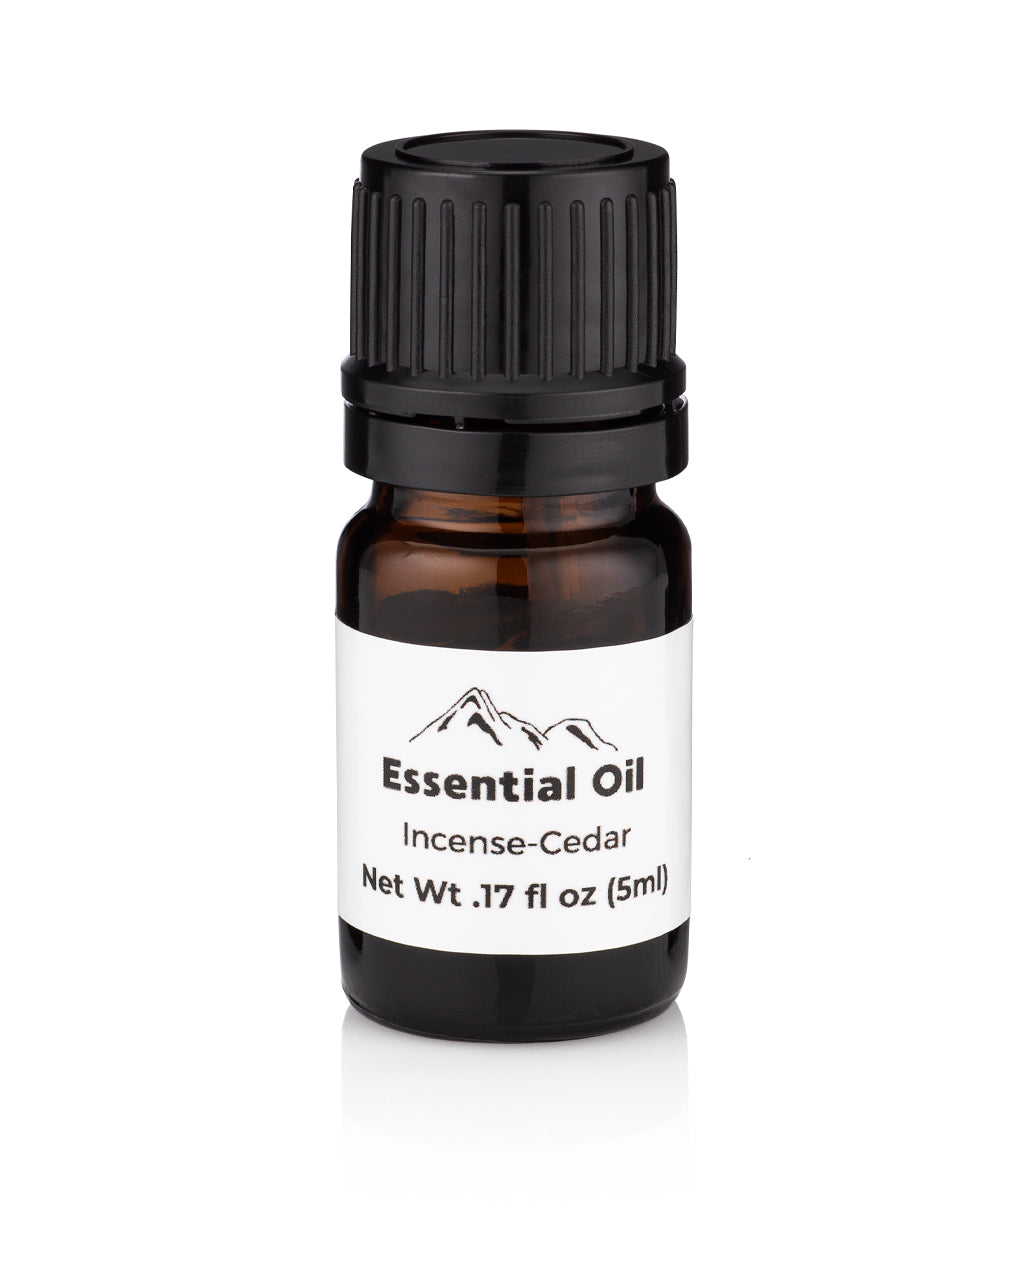 Incense-Cedar Essential Oil